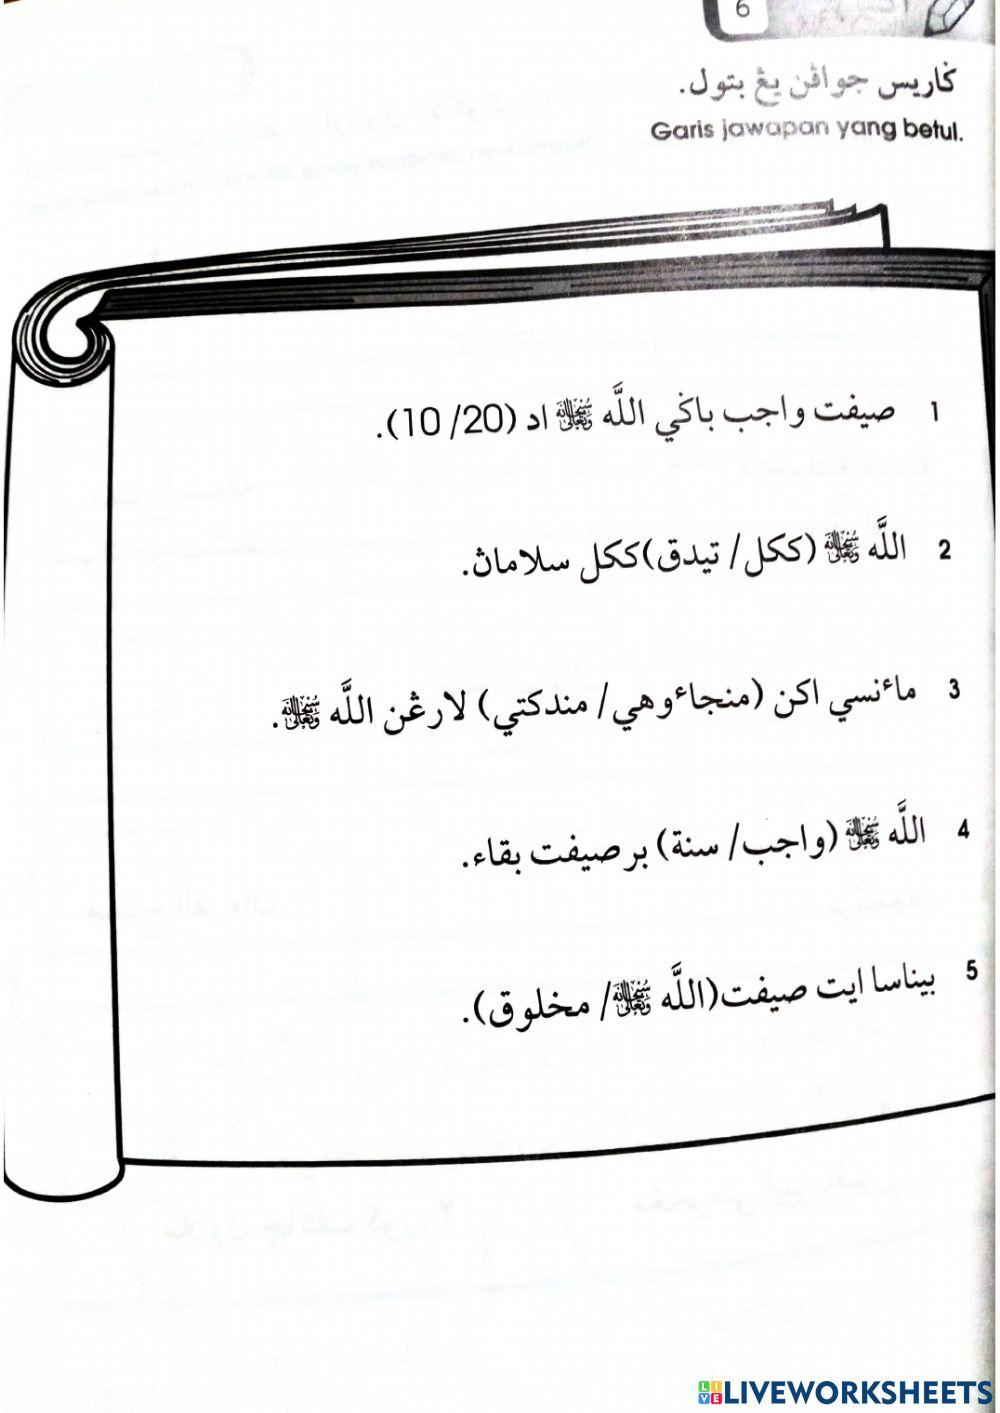 Sifat baqa'(2)